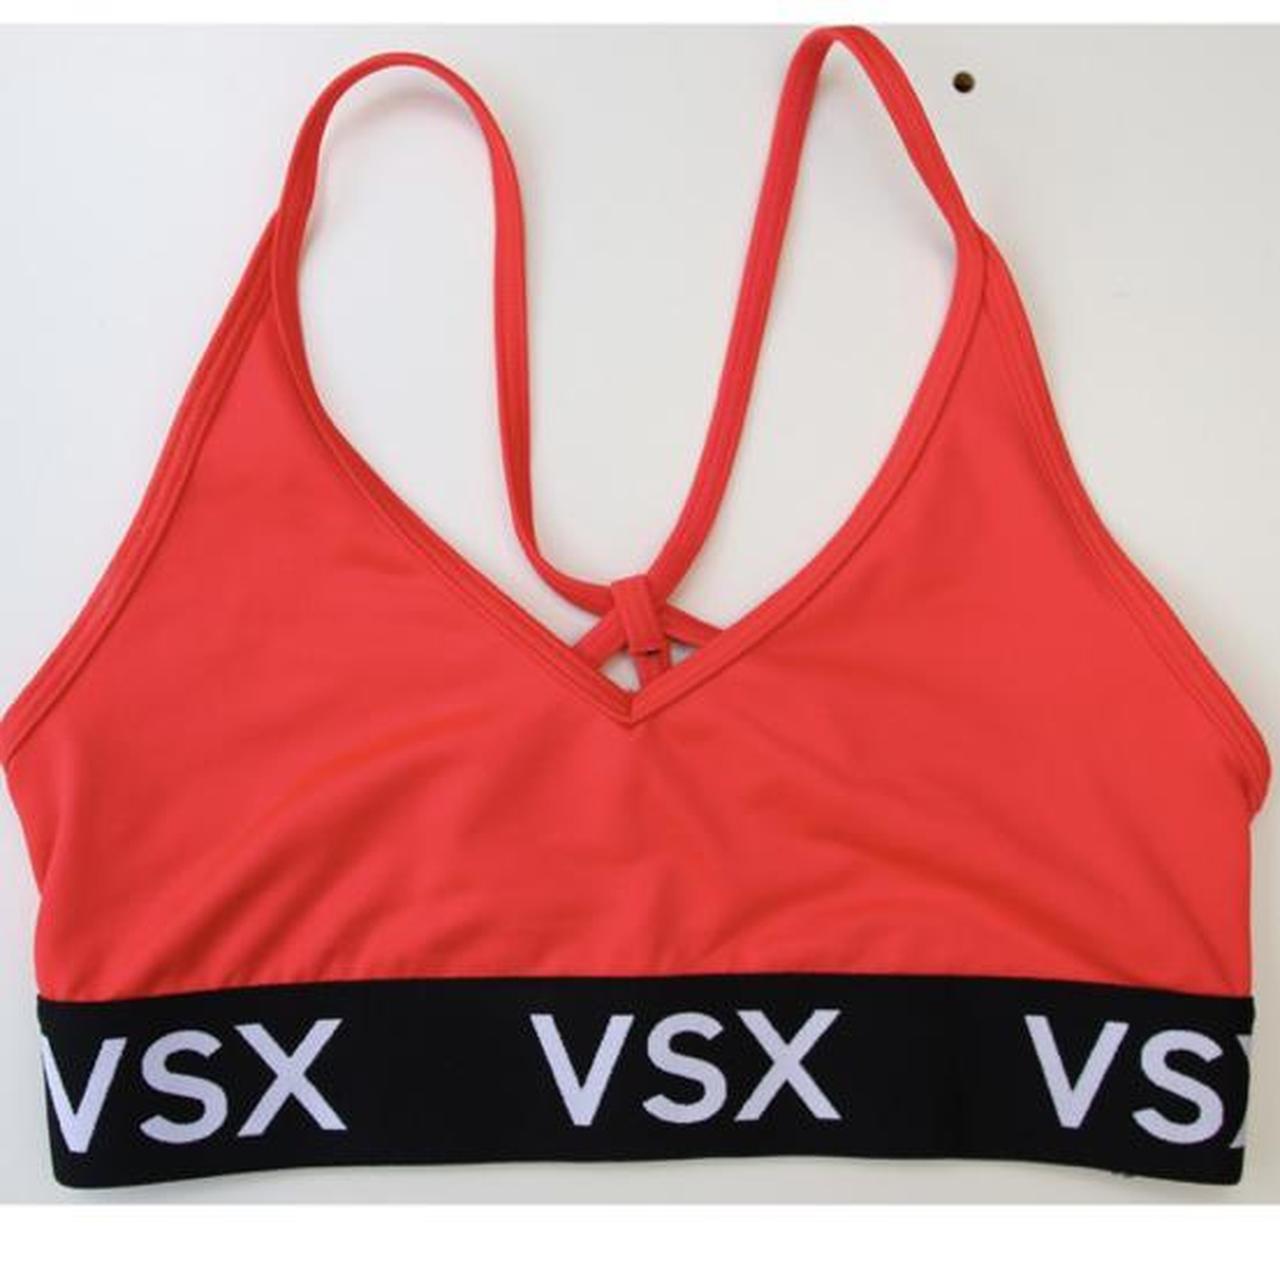 Victoria secret sports bra size xs - Depop